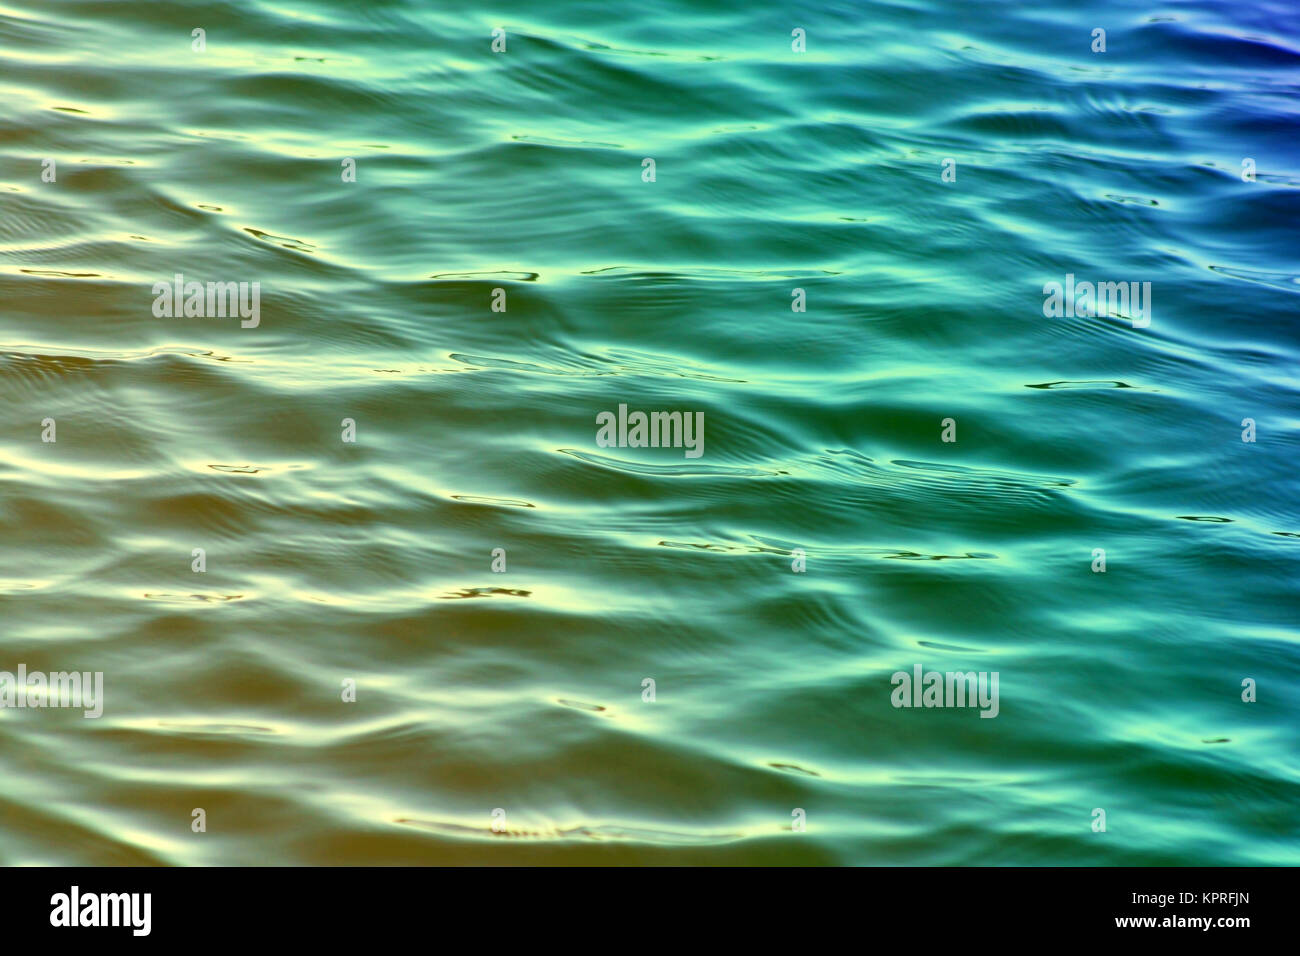 Soft increspature sulla superficie di acqua in bellissime tonalità di verde e di blu Foto Stock